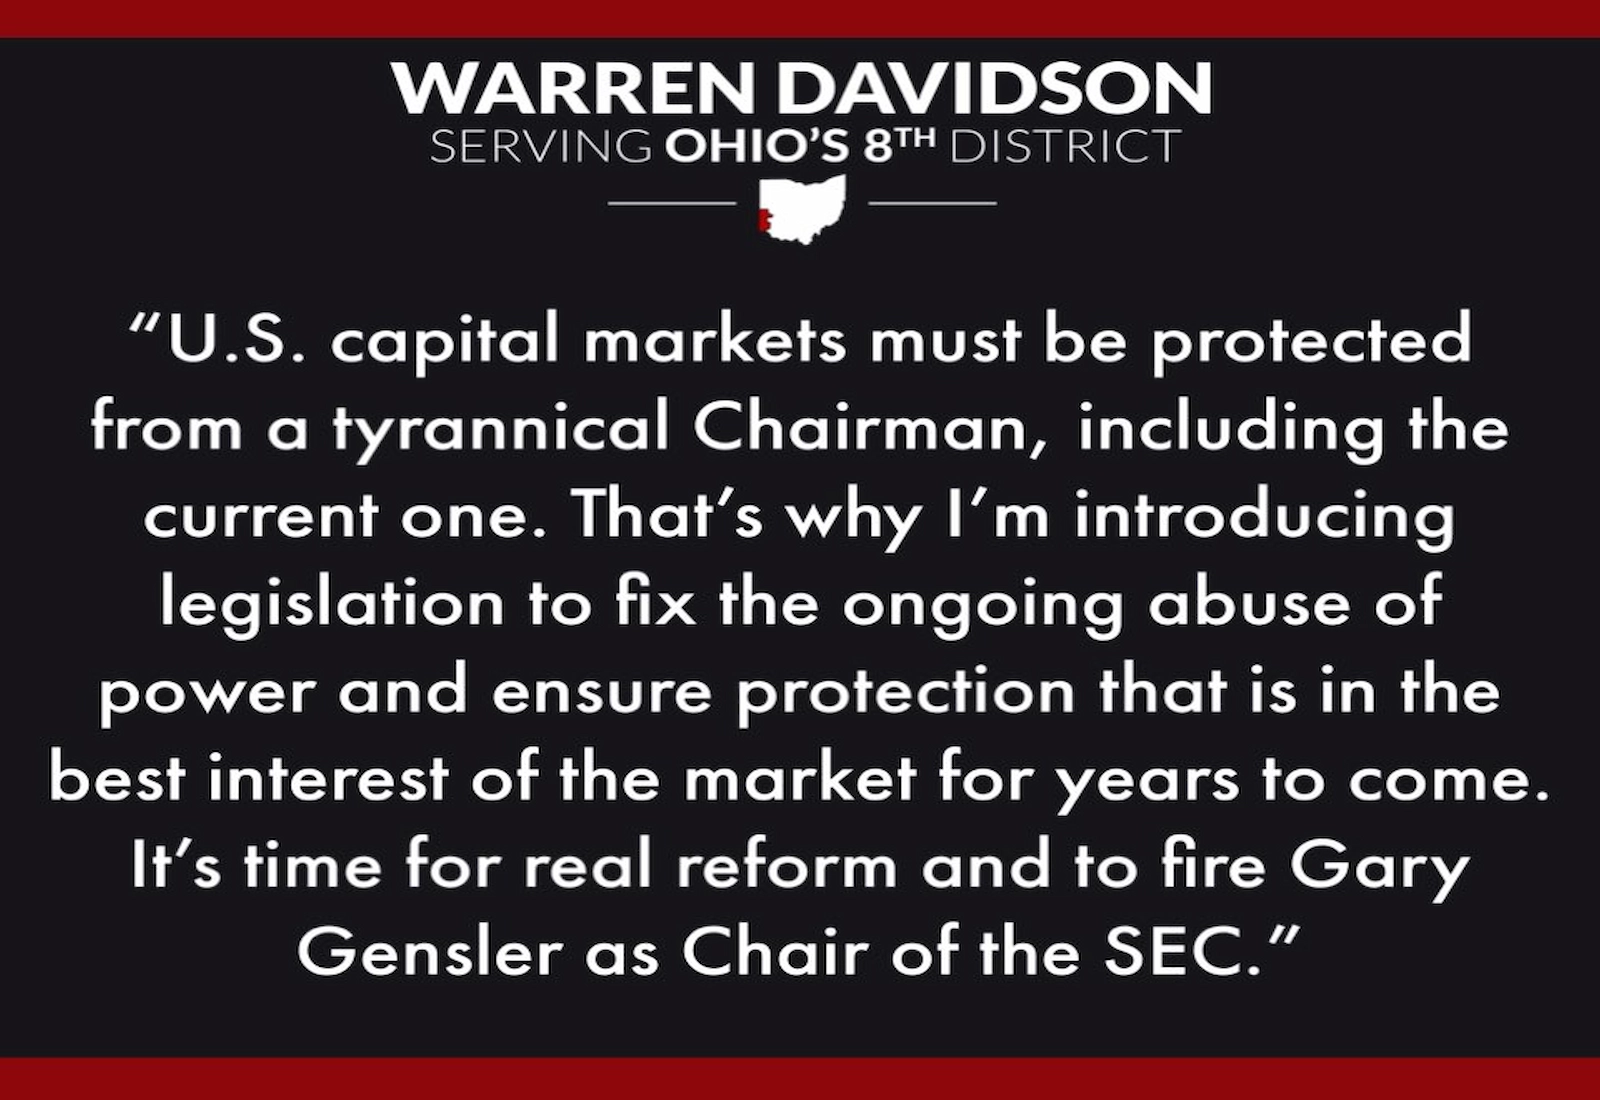 Congressman Warren Davidson called for the removal of Gary Gensler as SEC chairman.